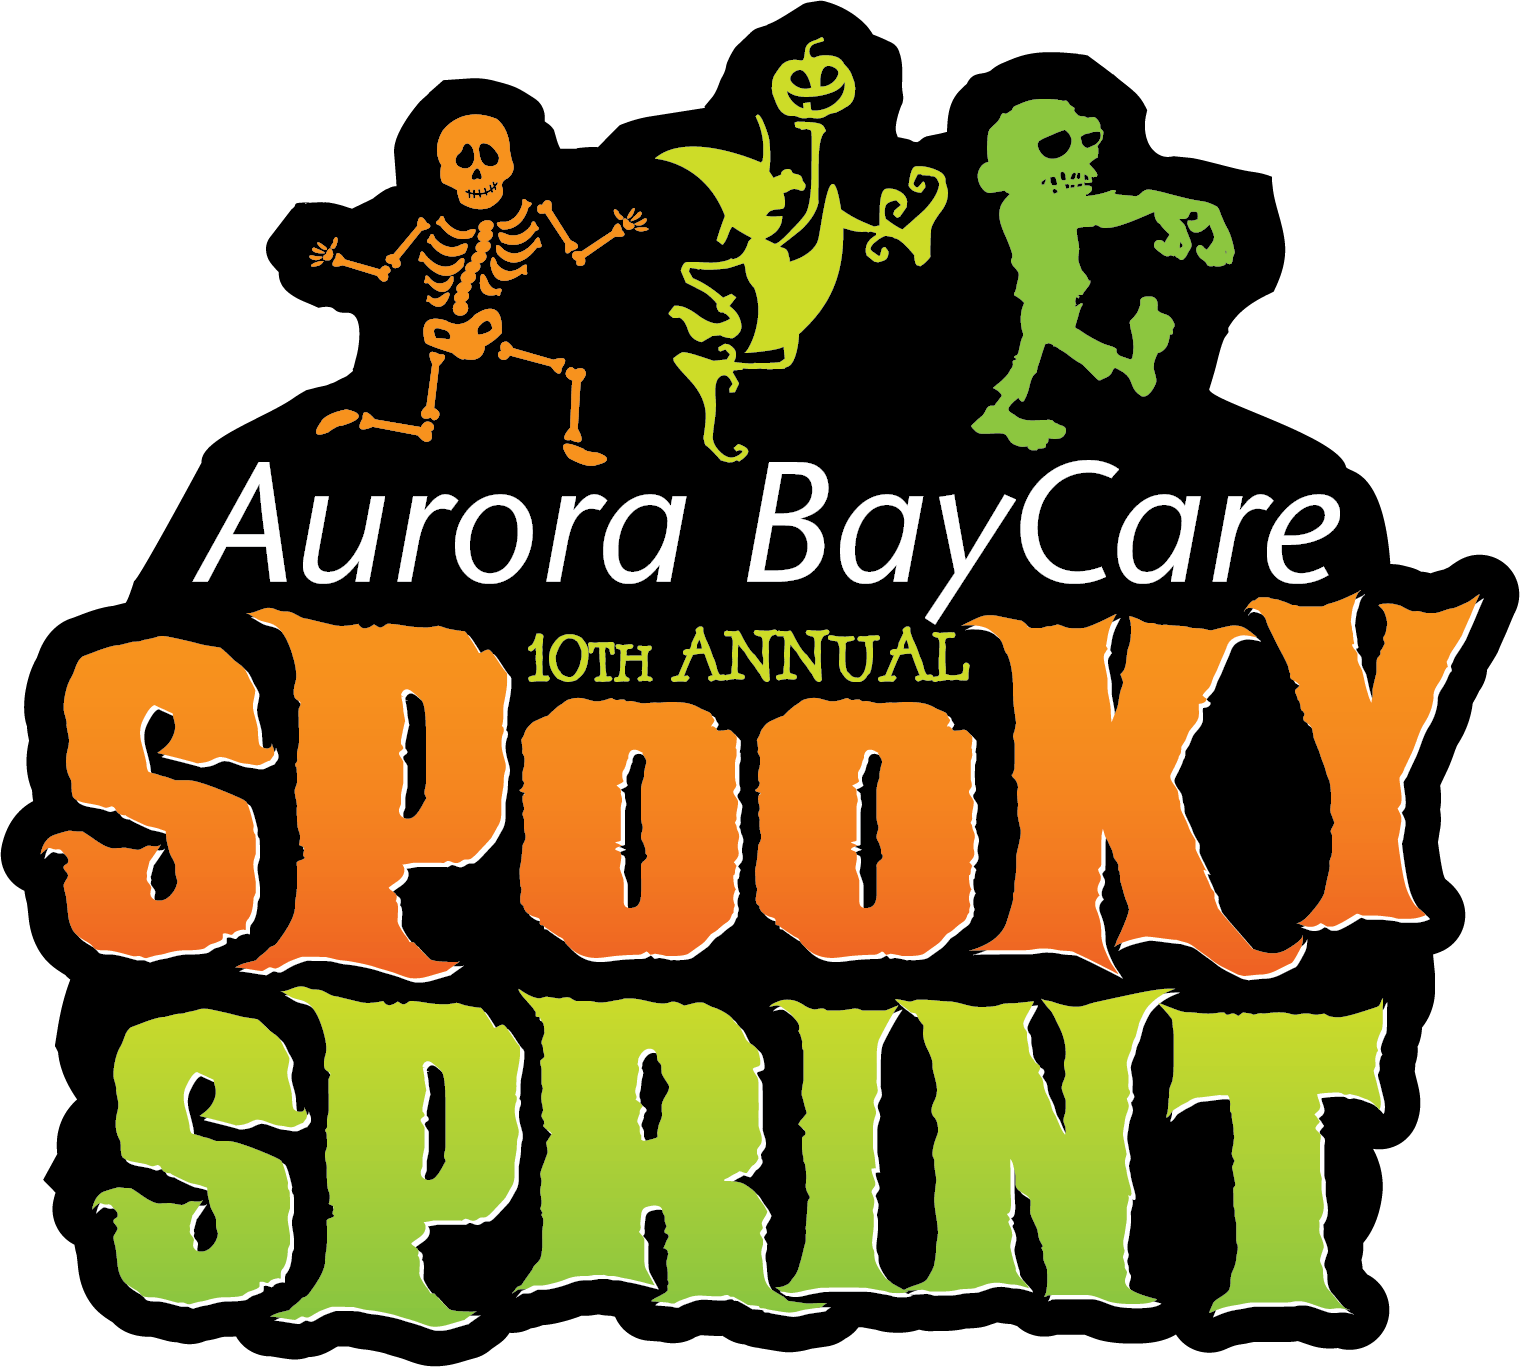 BayCare Logo - Spooky Sprint | Aurora BayCare Medical Center